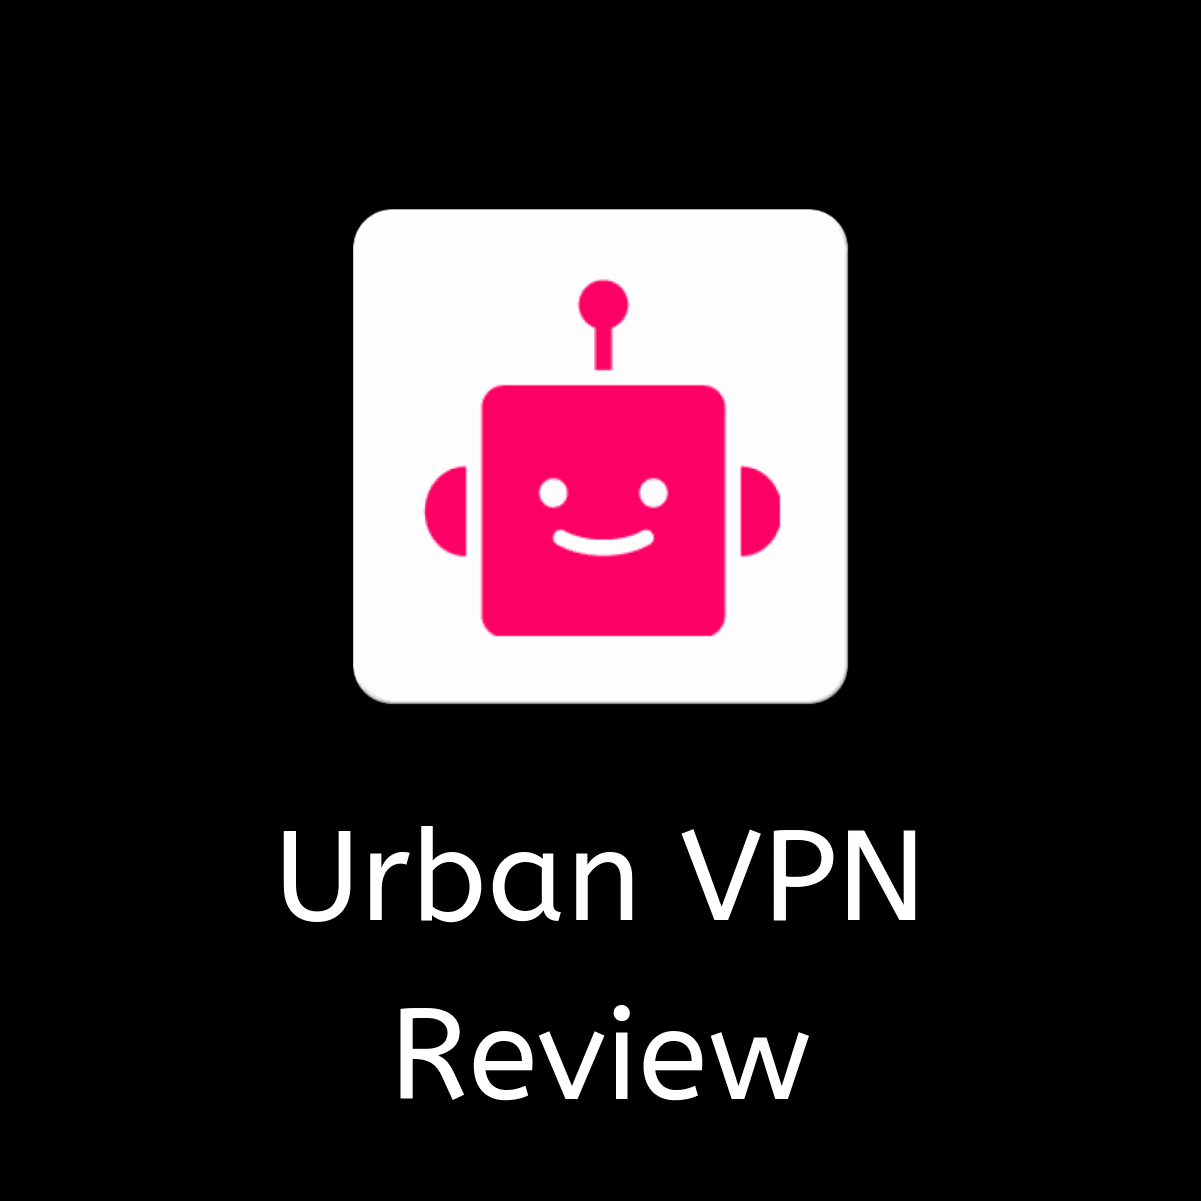 Urban VPN Review 2019 - A Free Peer-to-Peer VPN with Avg. Speed